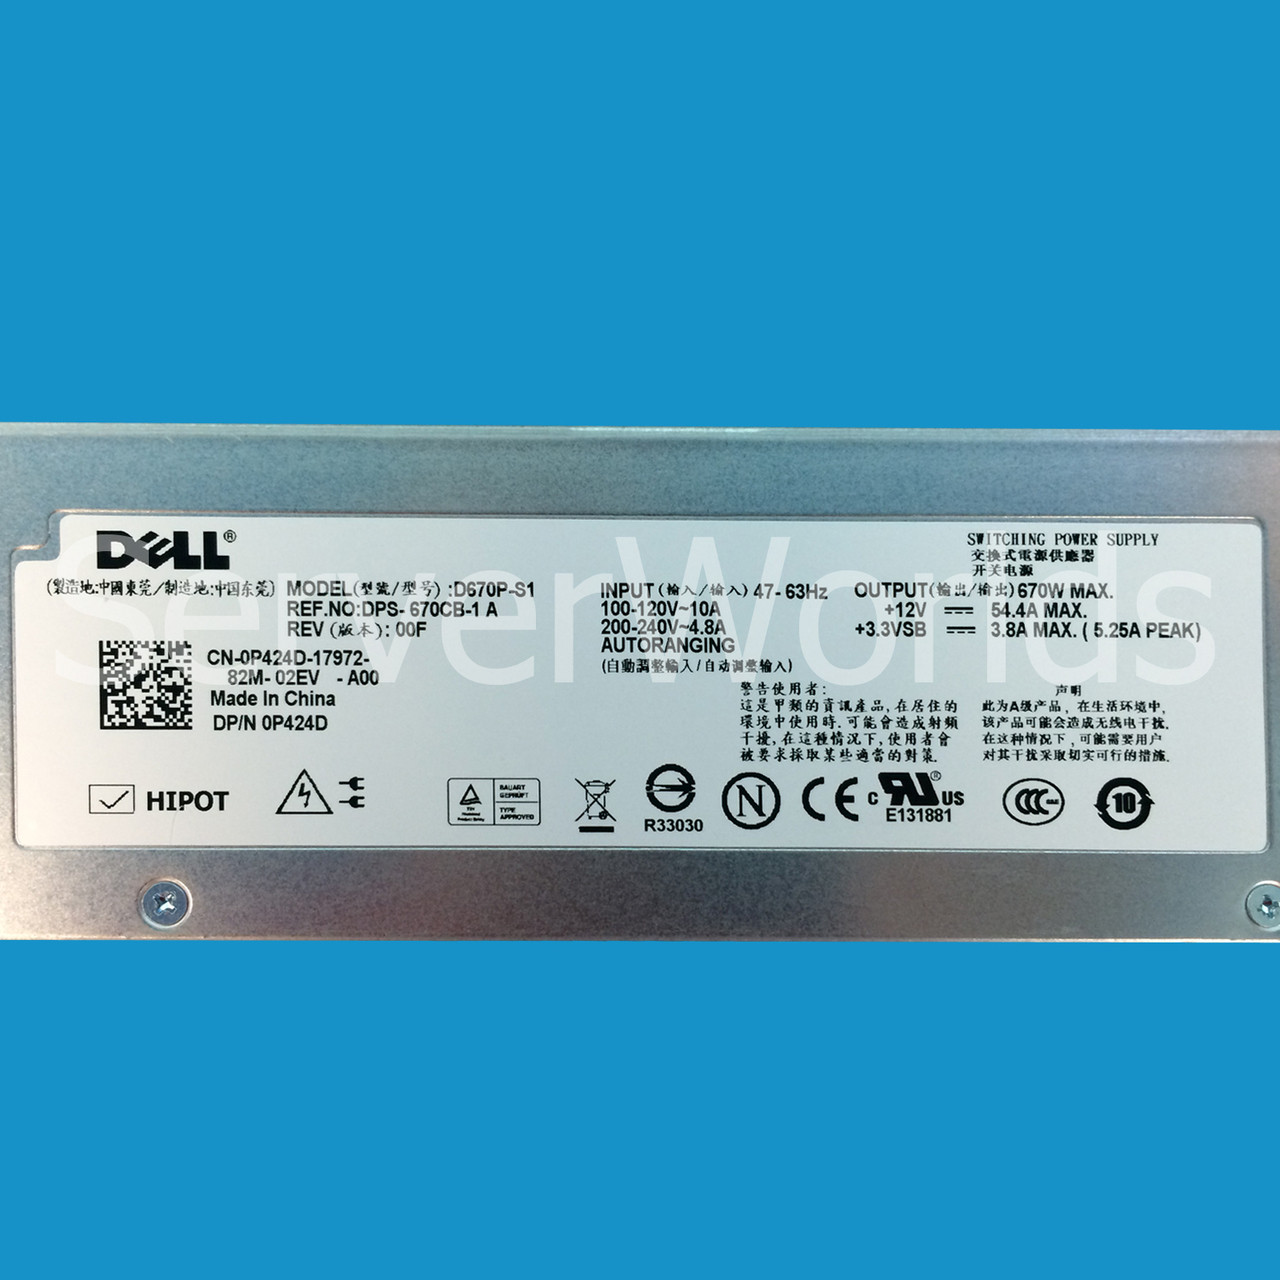 Dell P424D PowerEdge 1950 Power Supply D670P-S1 DPS-670CB-1 A